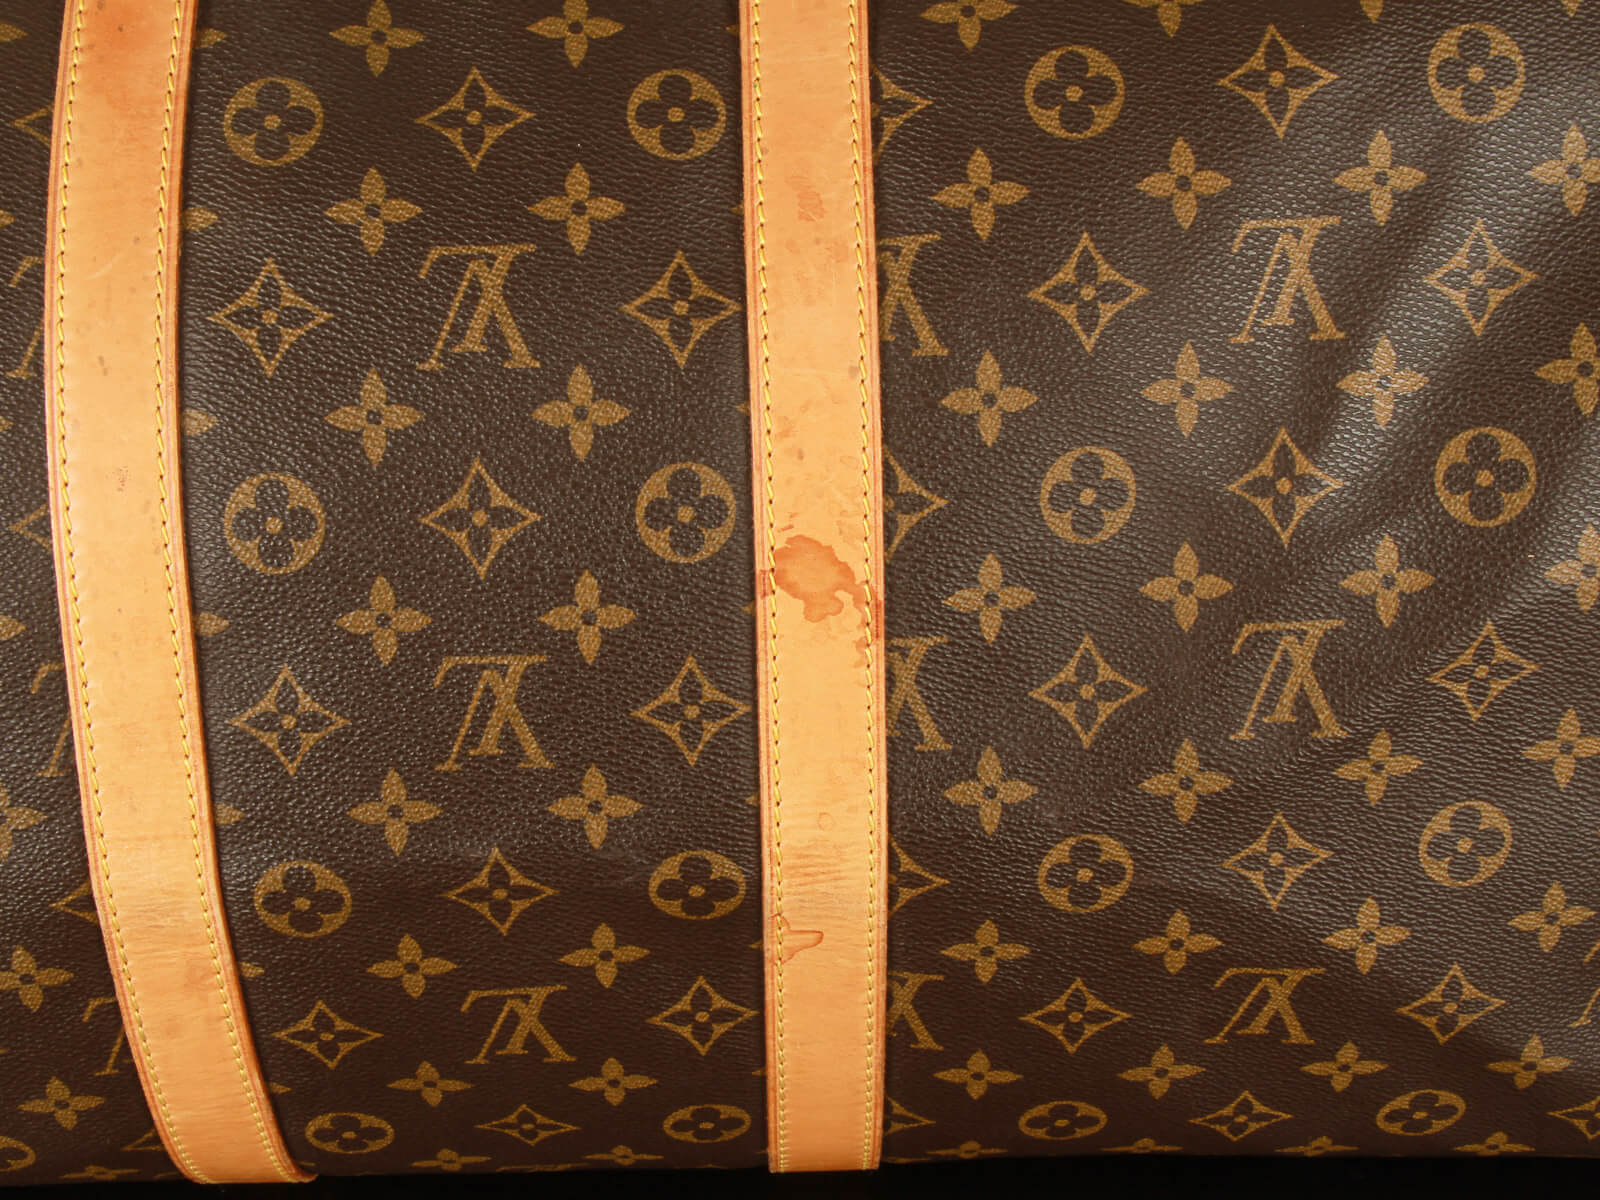 Louis Vuitton Keepall Travel bag 388423